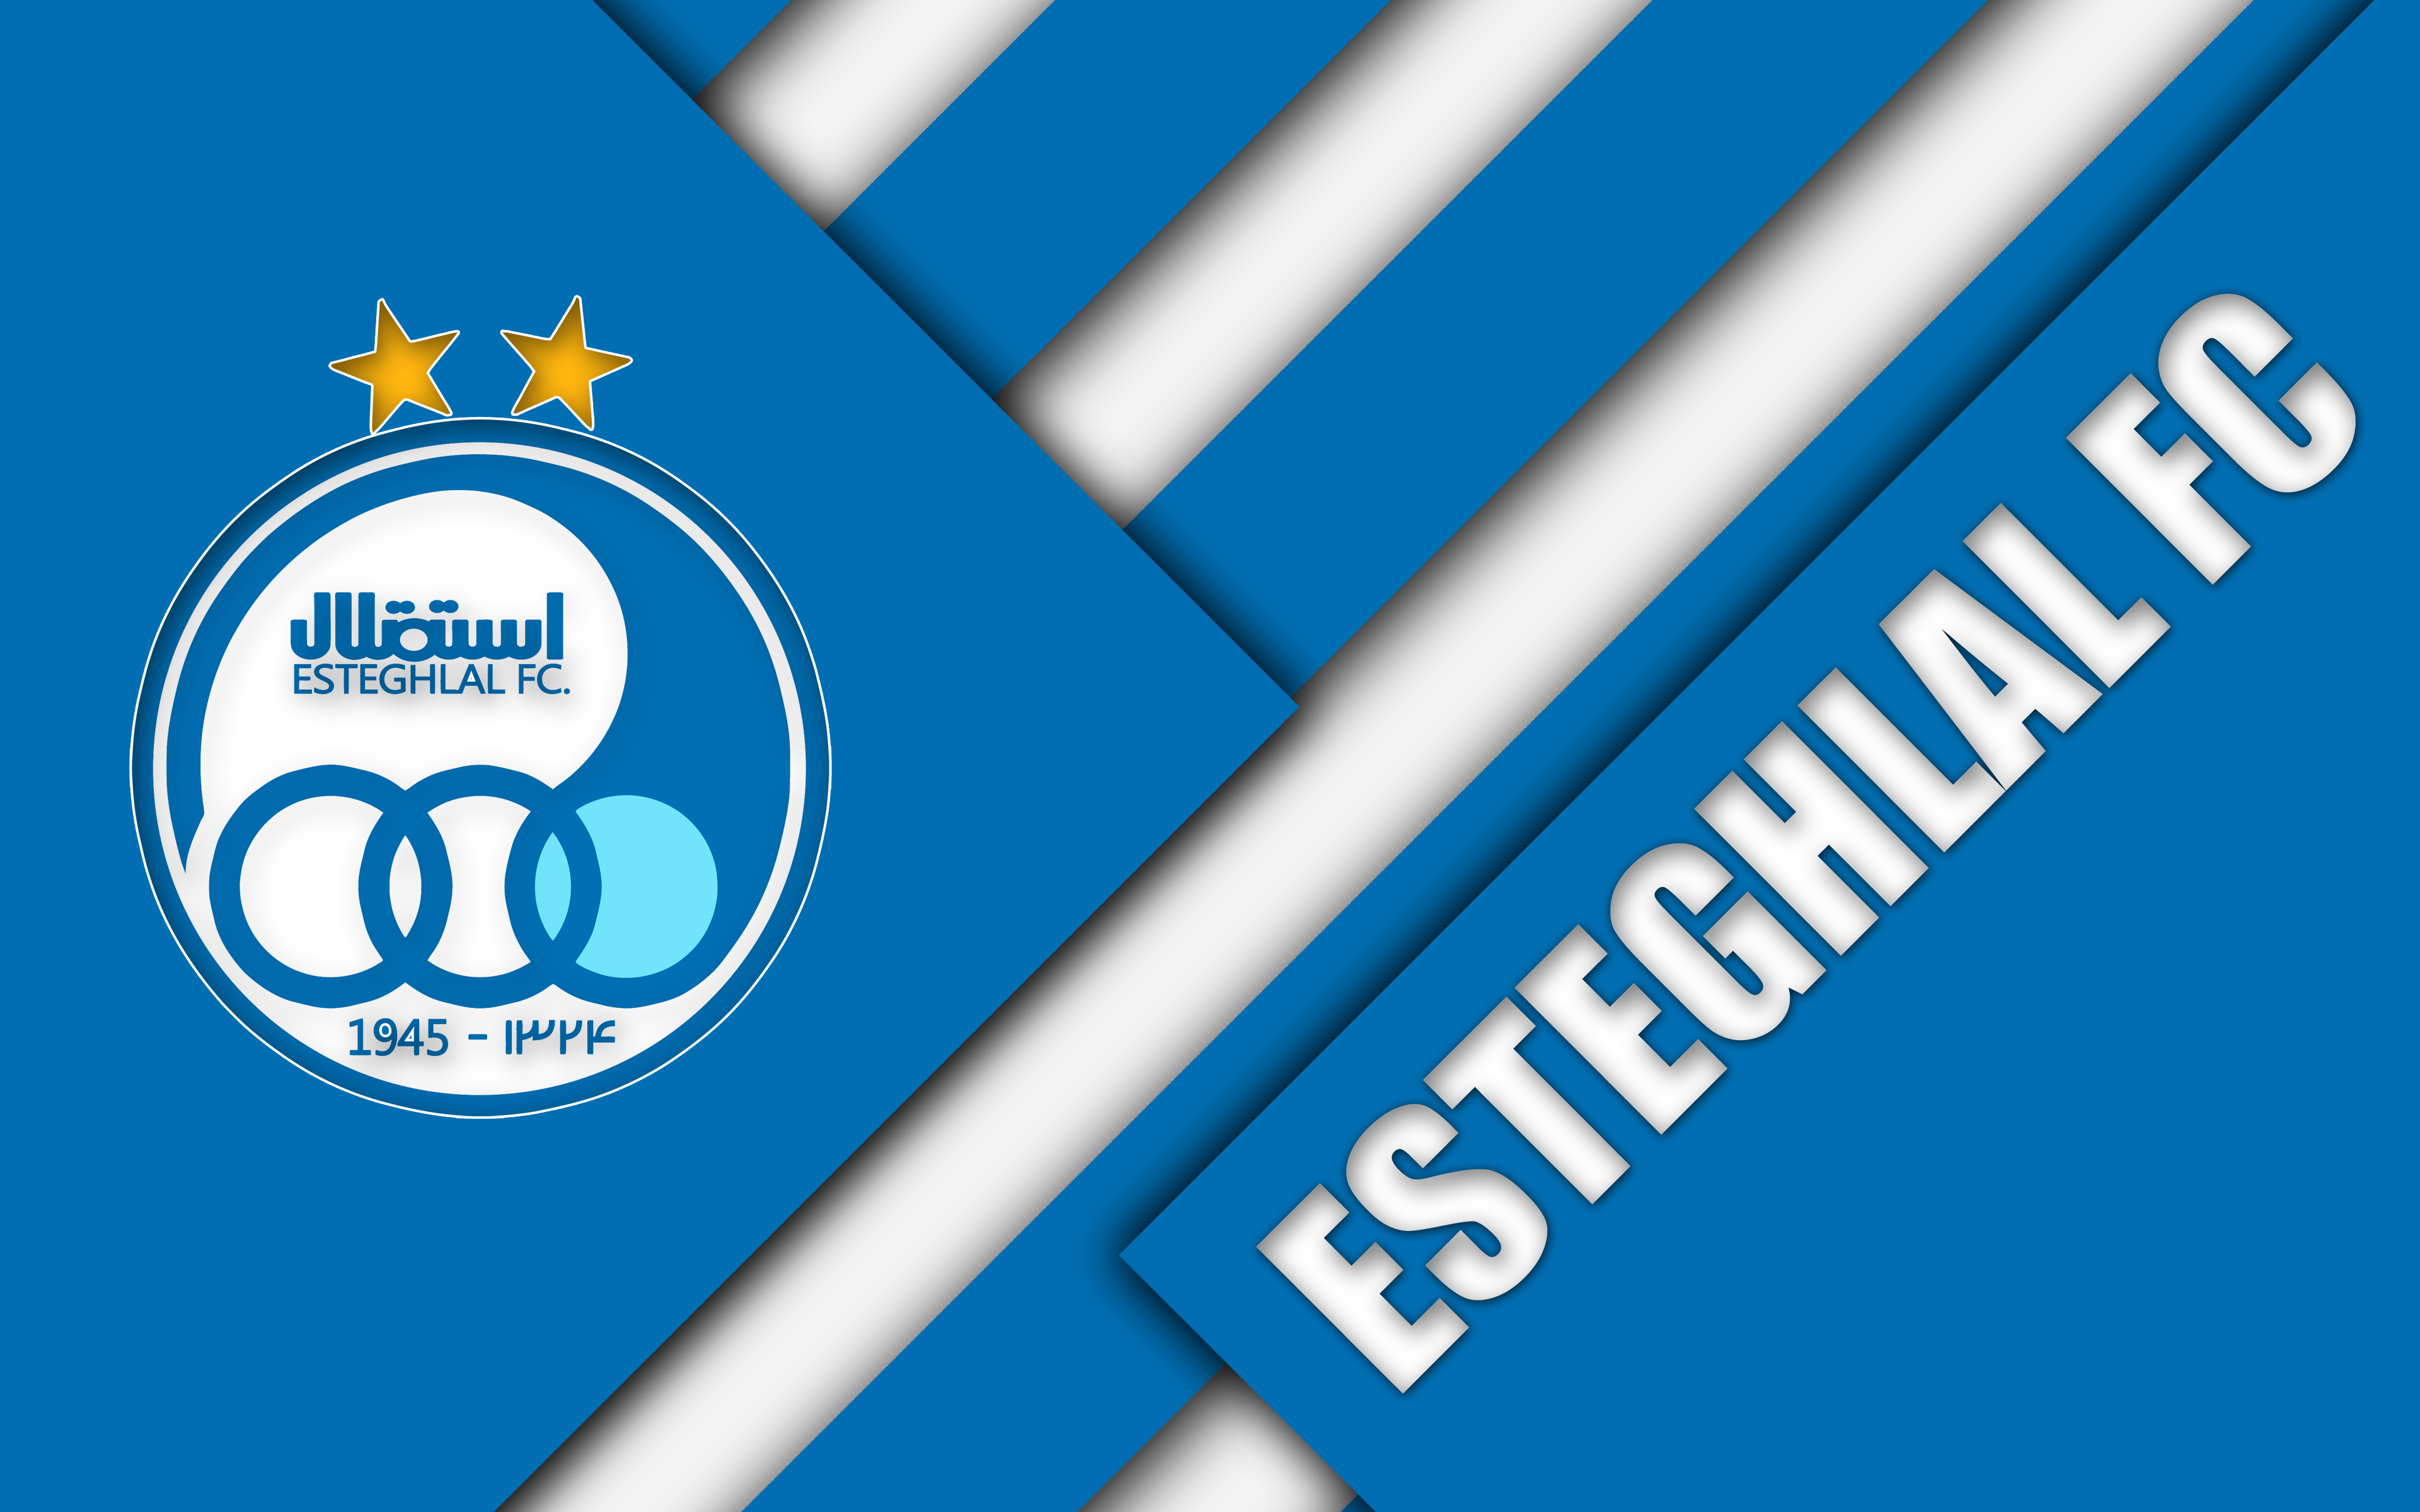 esteghlal f c, sports, emblem, logo, soccer